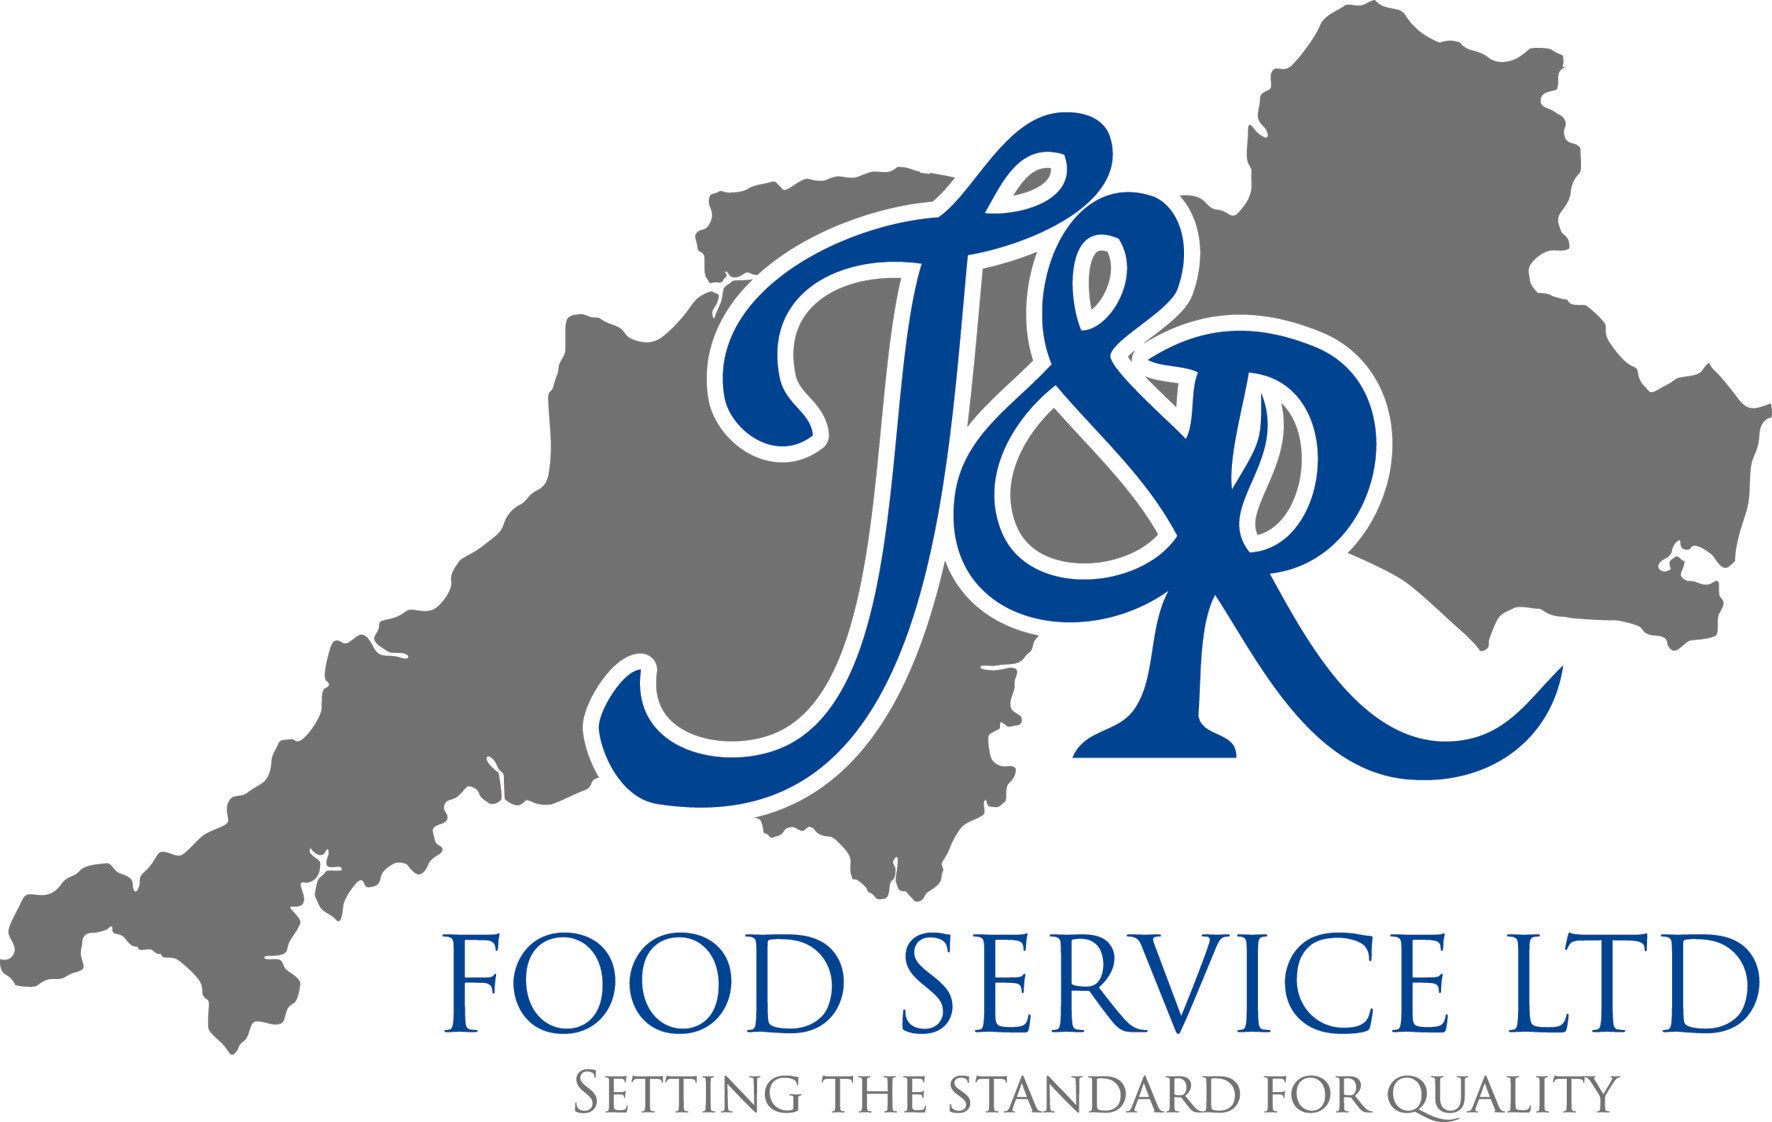 (c) Jrfoodservice.co.uk